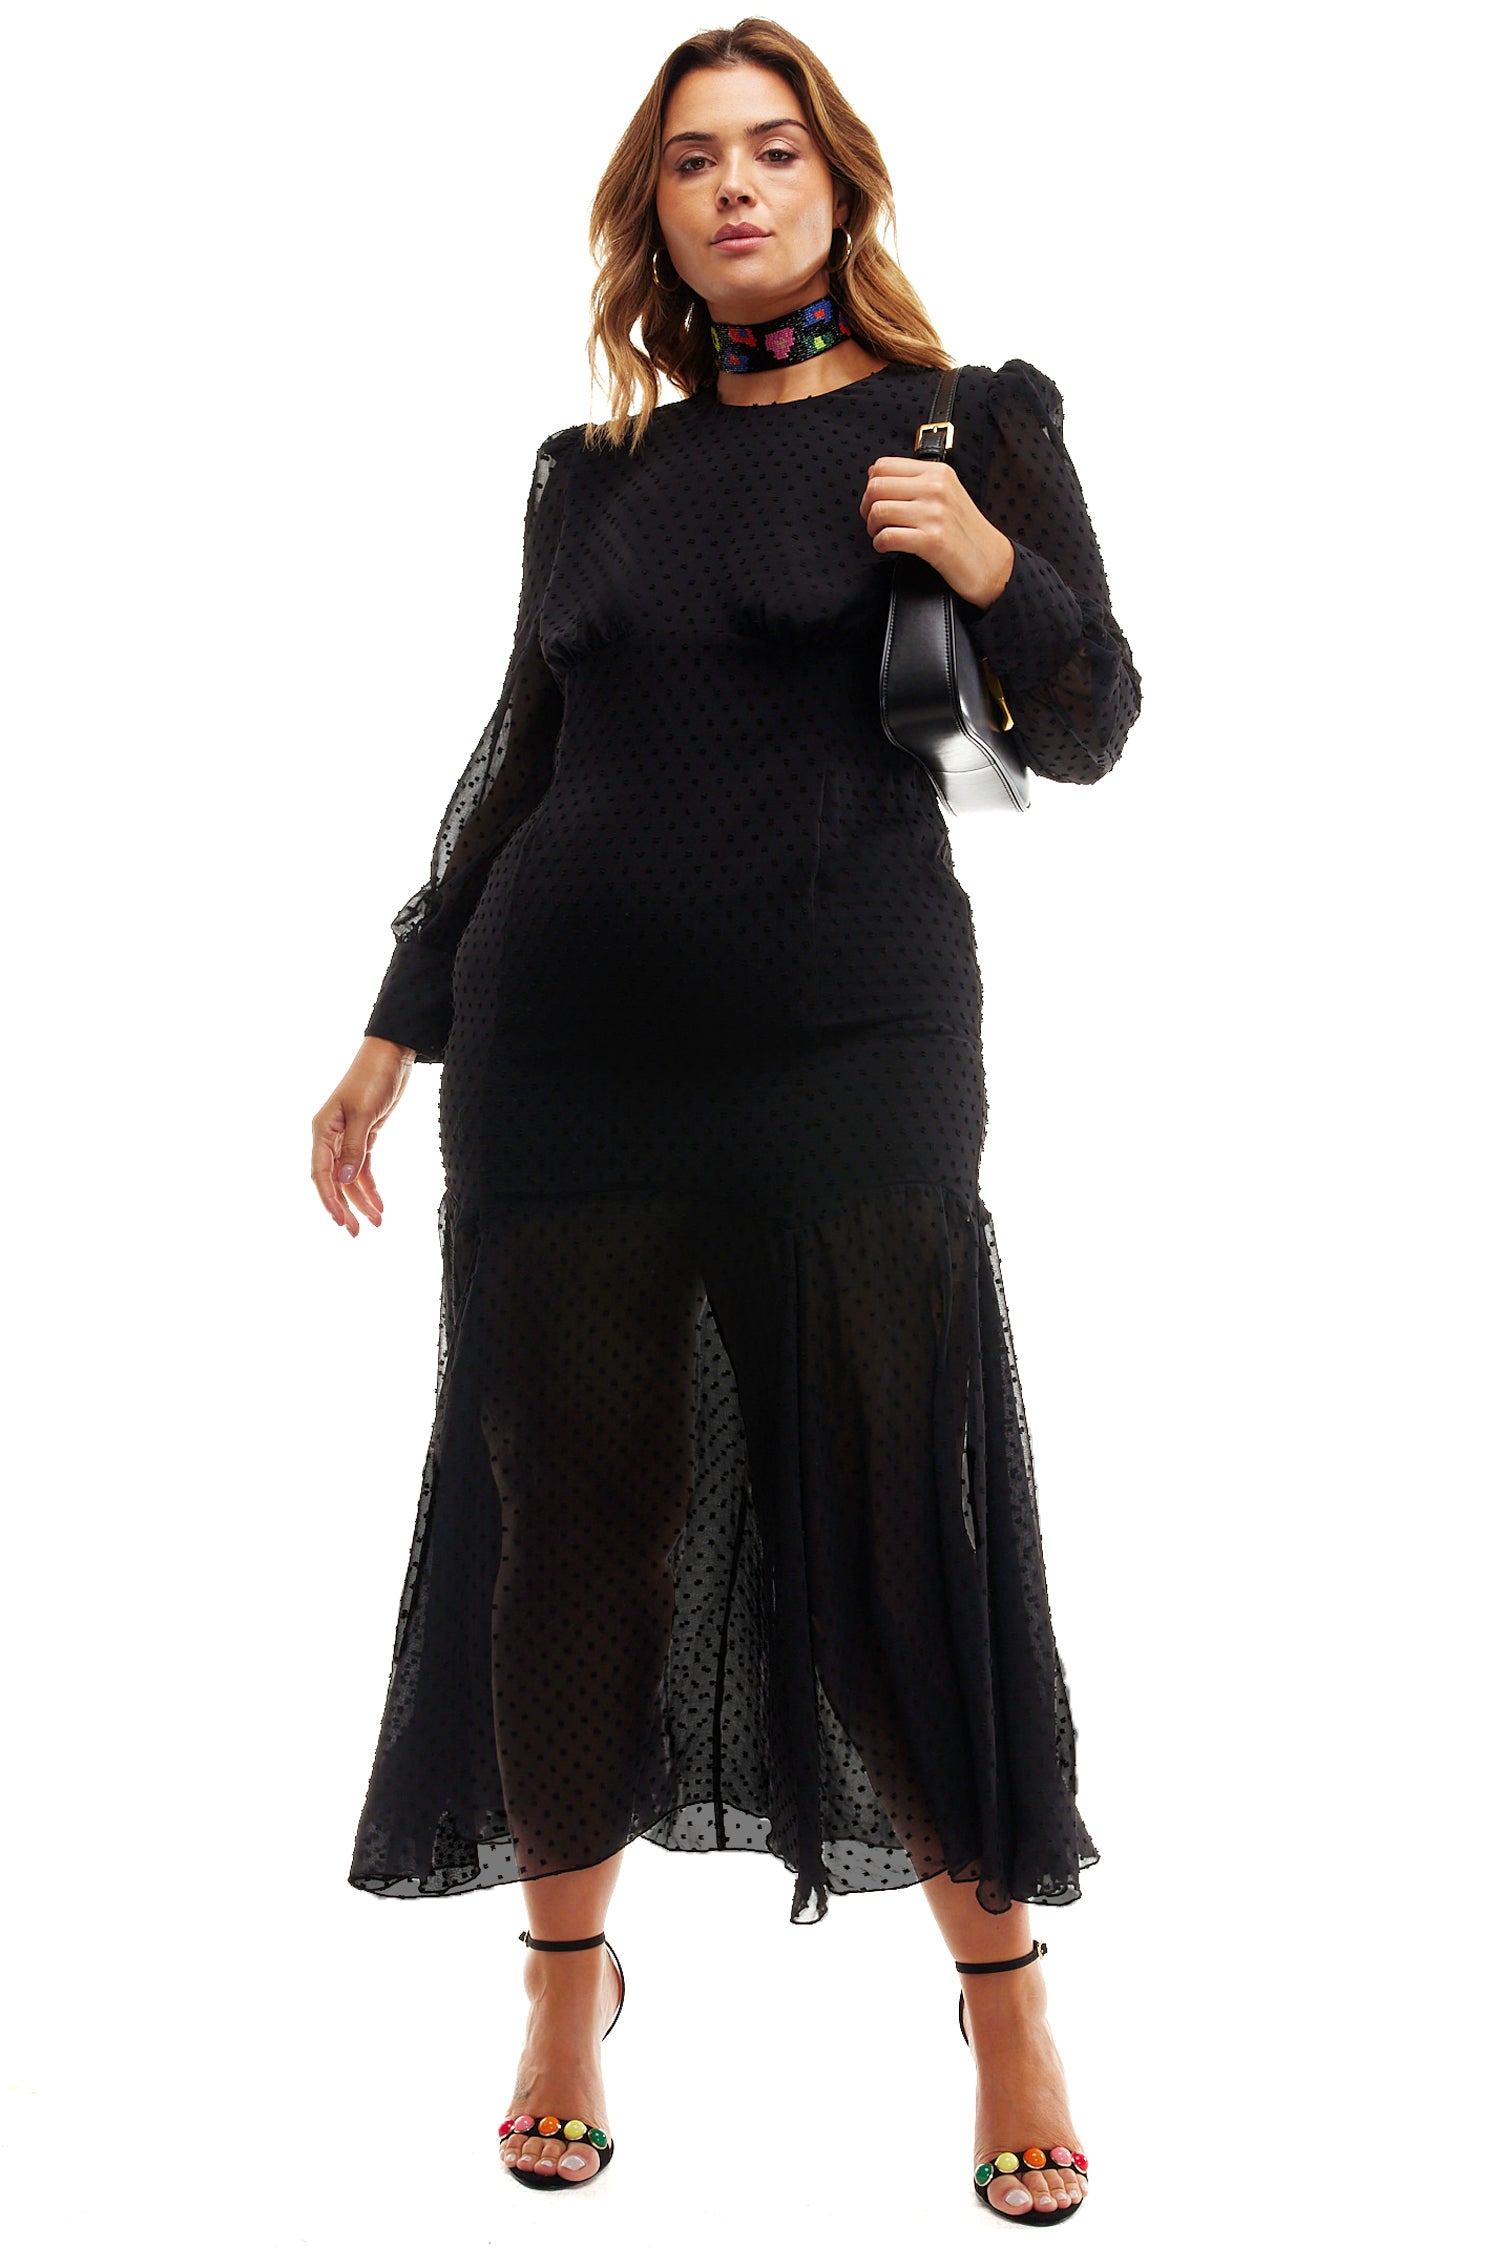 Model wearing Black Dobby Midi Dress standing facing the camera